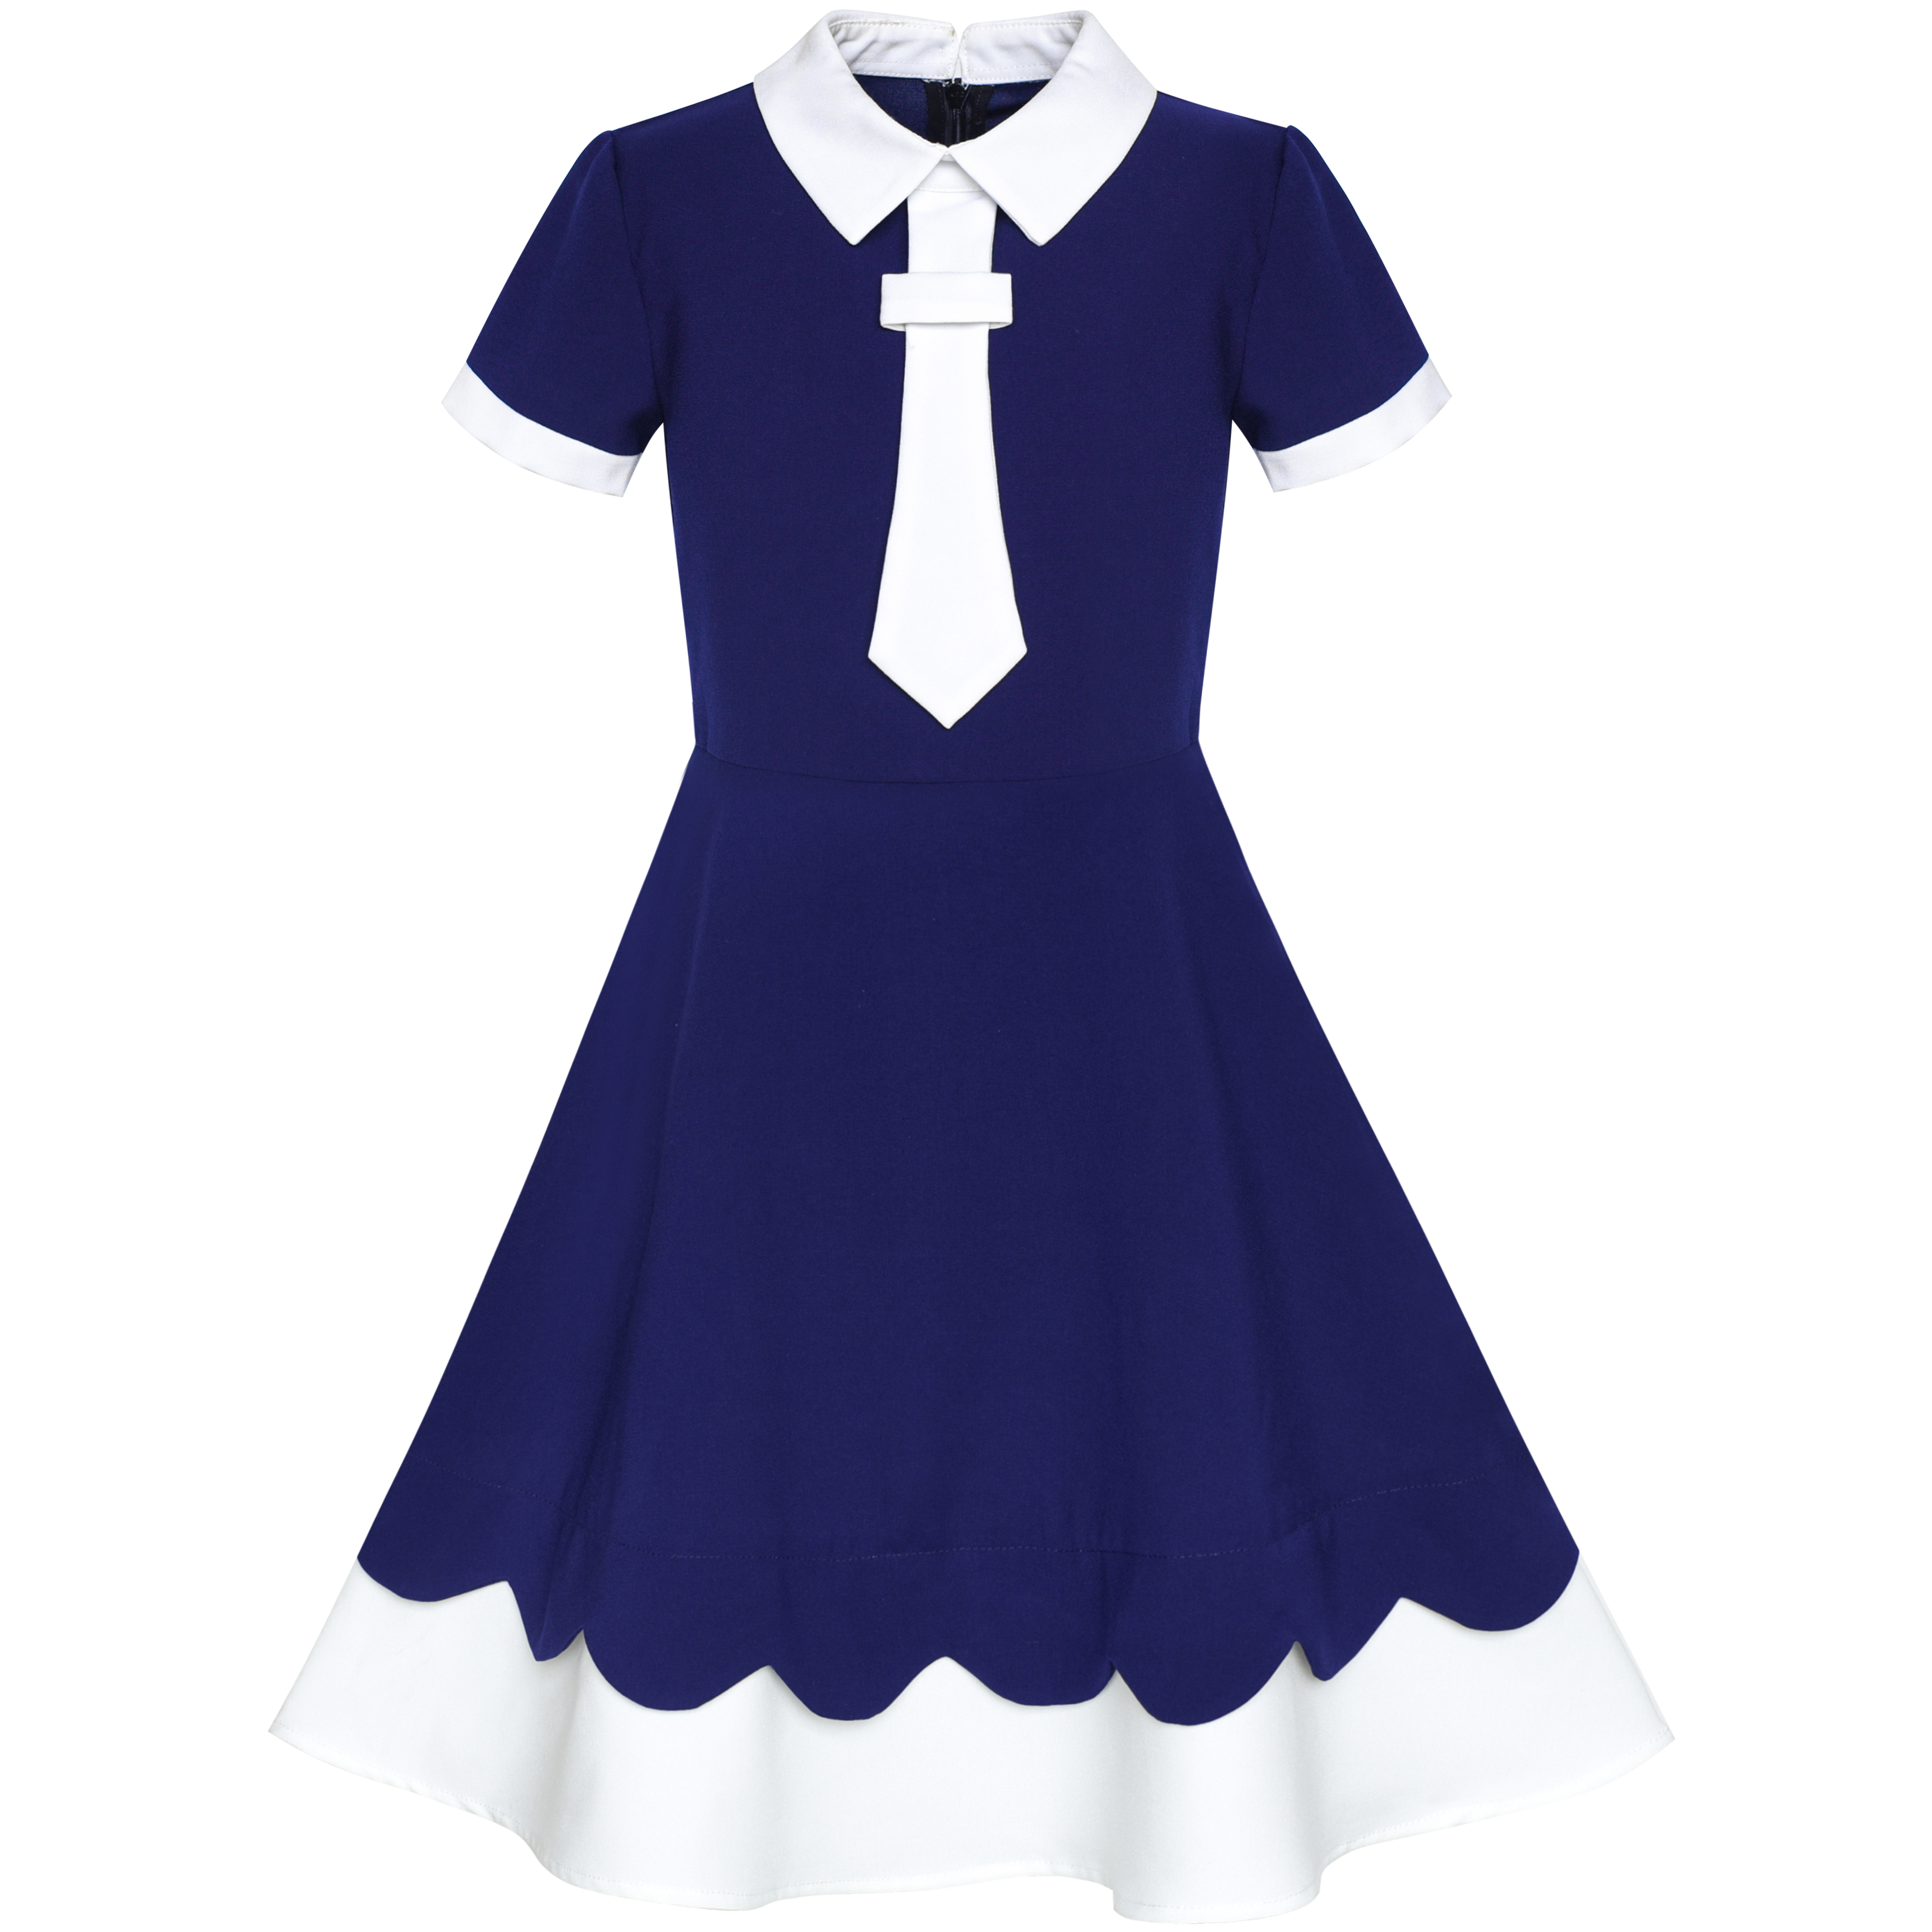 Girls Dress Back School Uniform Navy Blue White Collar Tie Short Sleeve 5 Years - image 1 of 6